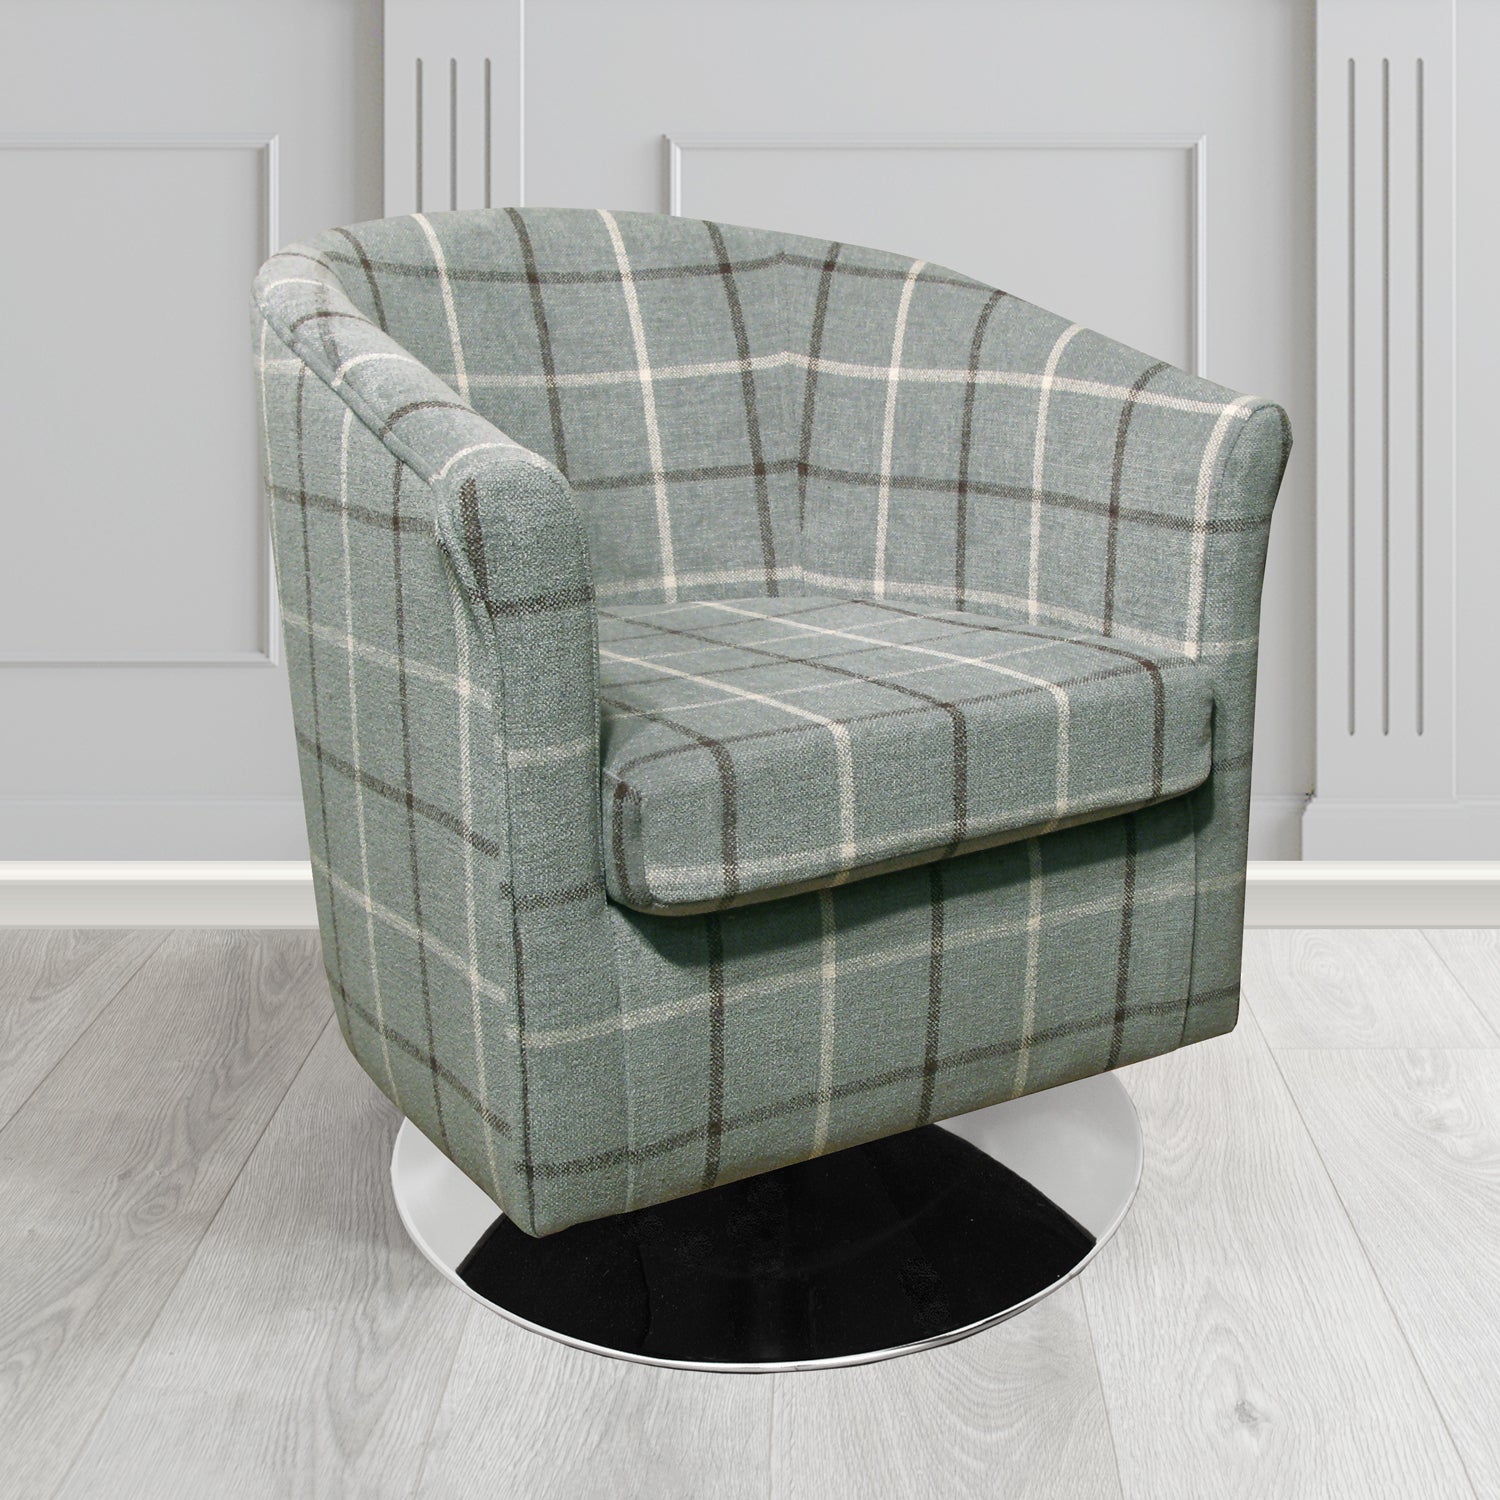 Tuscany Swivel Tub Chair in Lana Dove Grey Check Tartan LAN1261 Crib 5 Fabric - The Tub Chair Shop